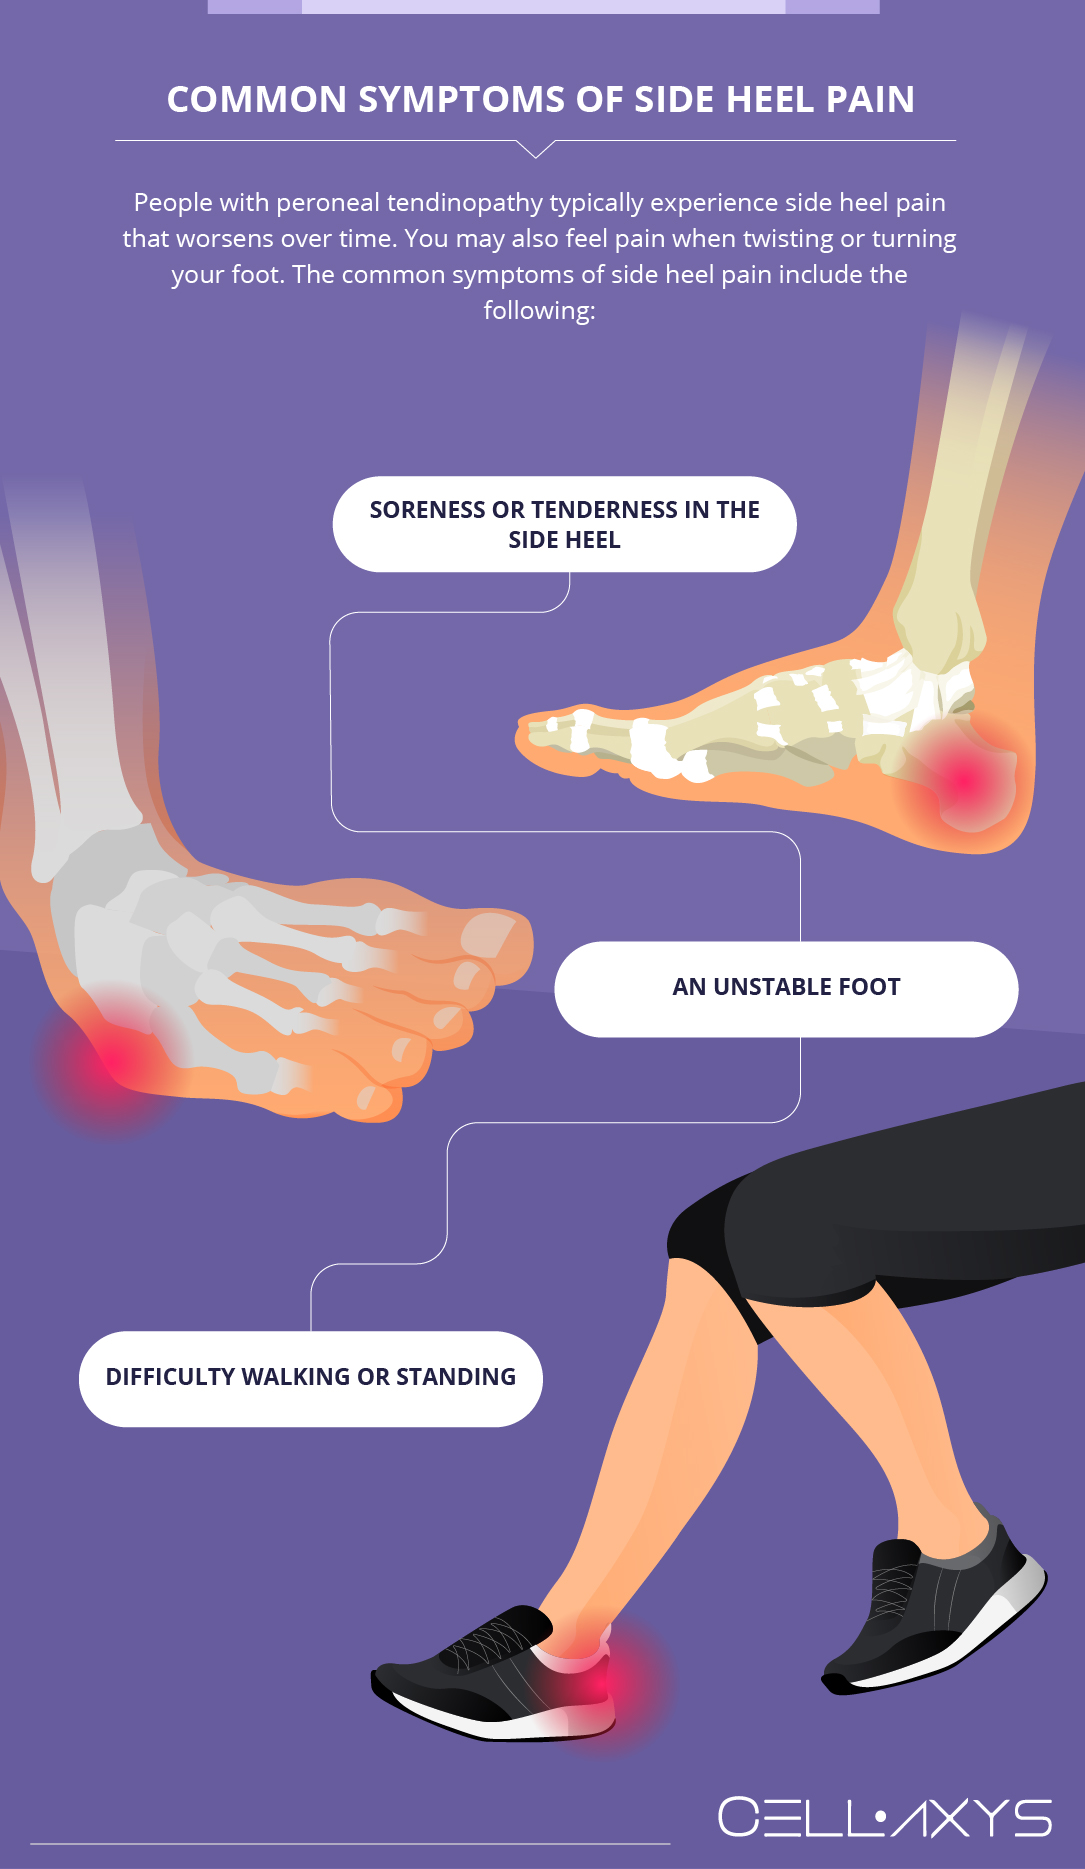 Common Symptoms of Side Heel Pain